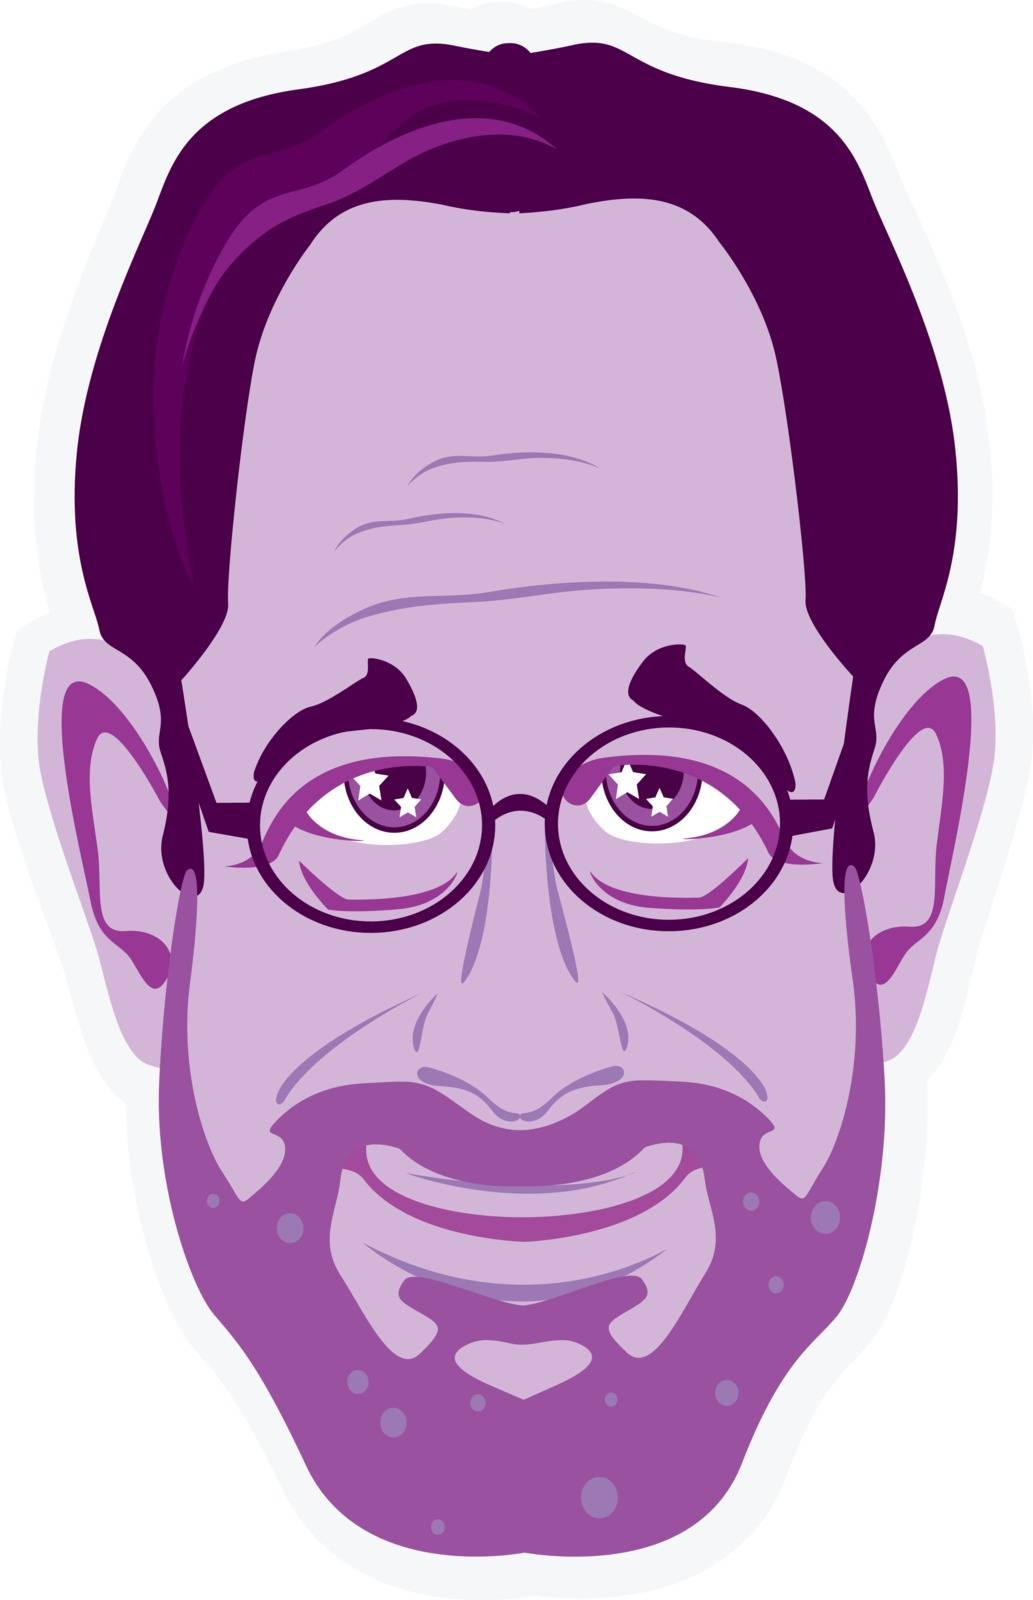 Professor bearded face vector illustration clip-art image